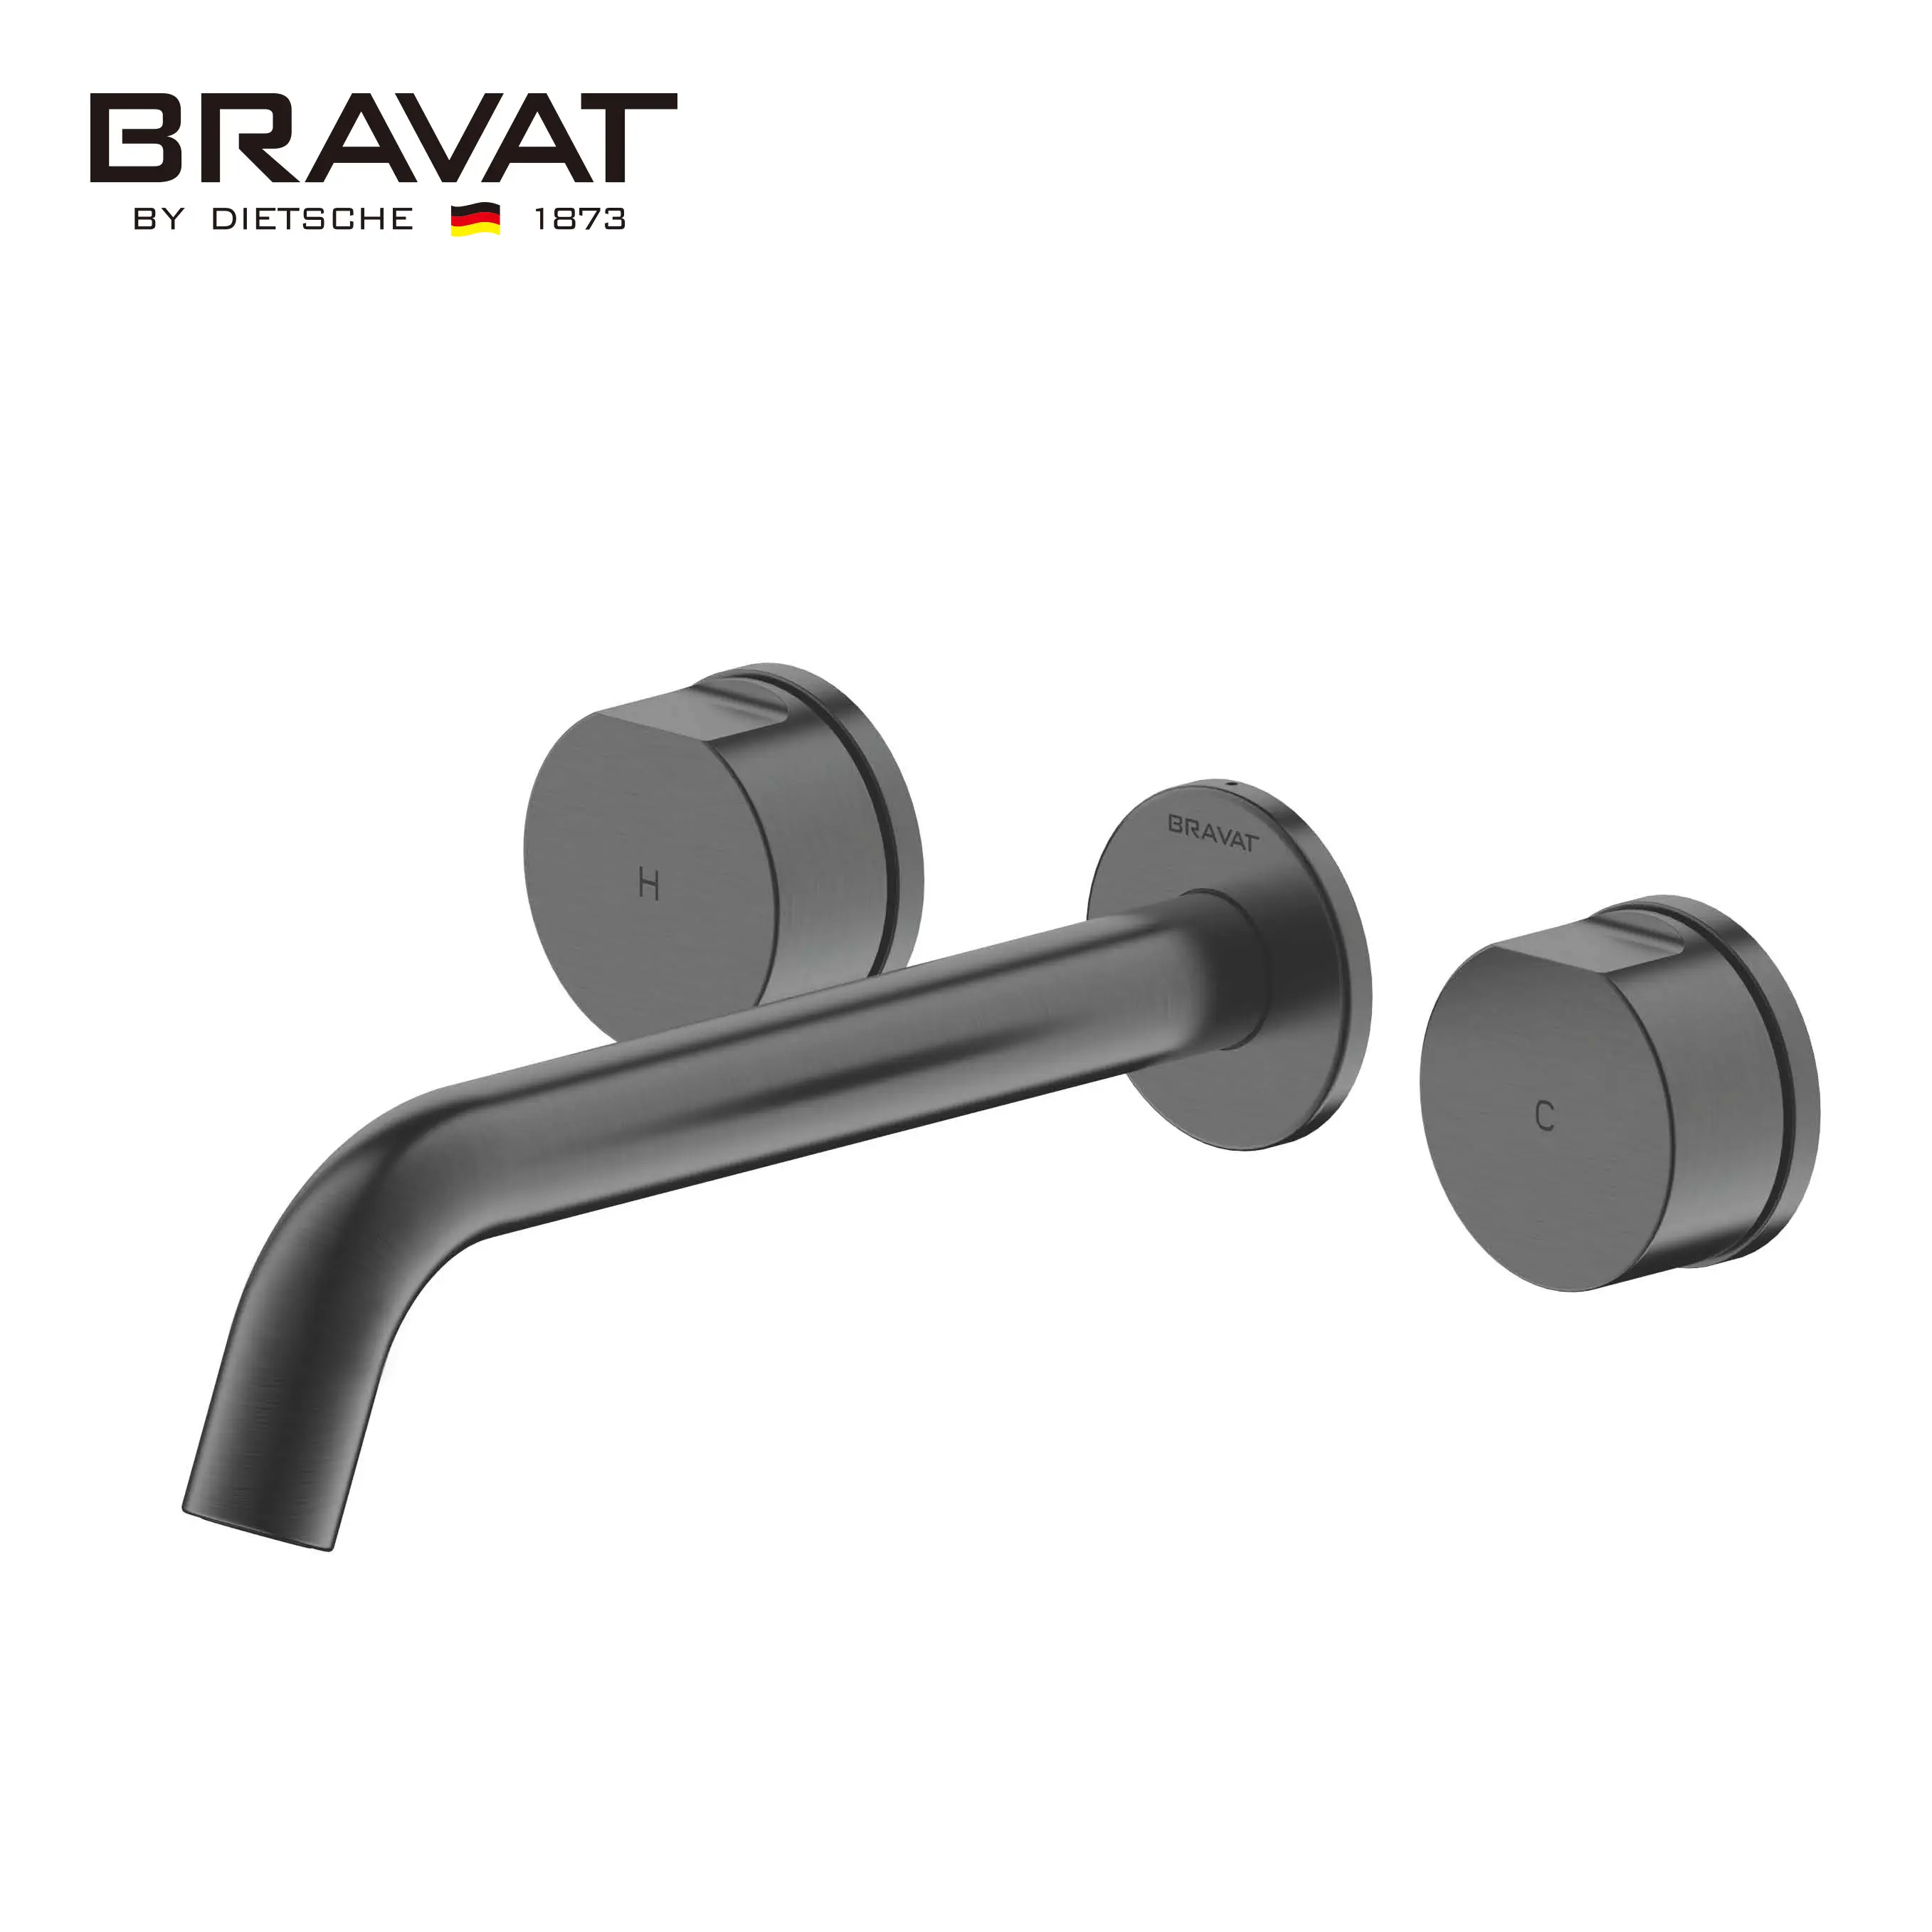 Bravat Hotel Built-in Gunmetal Sink Concealed Faucet Wall Mounted Bathroom Basin Mixer Tap